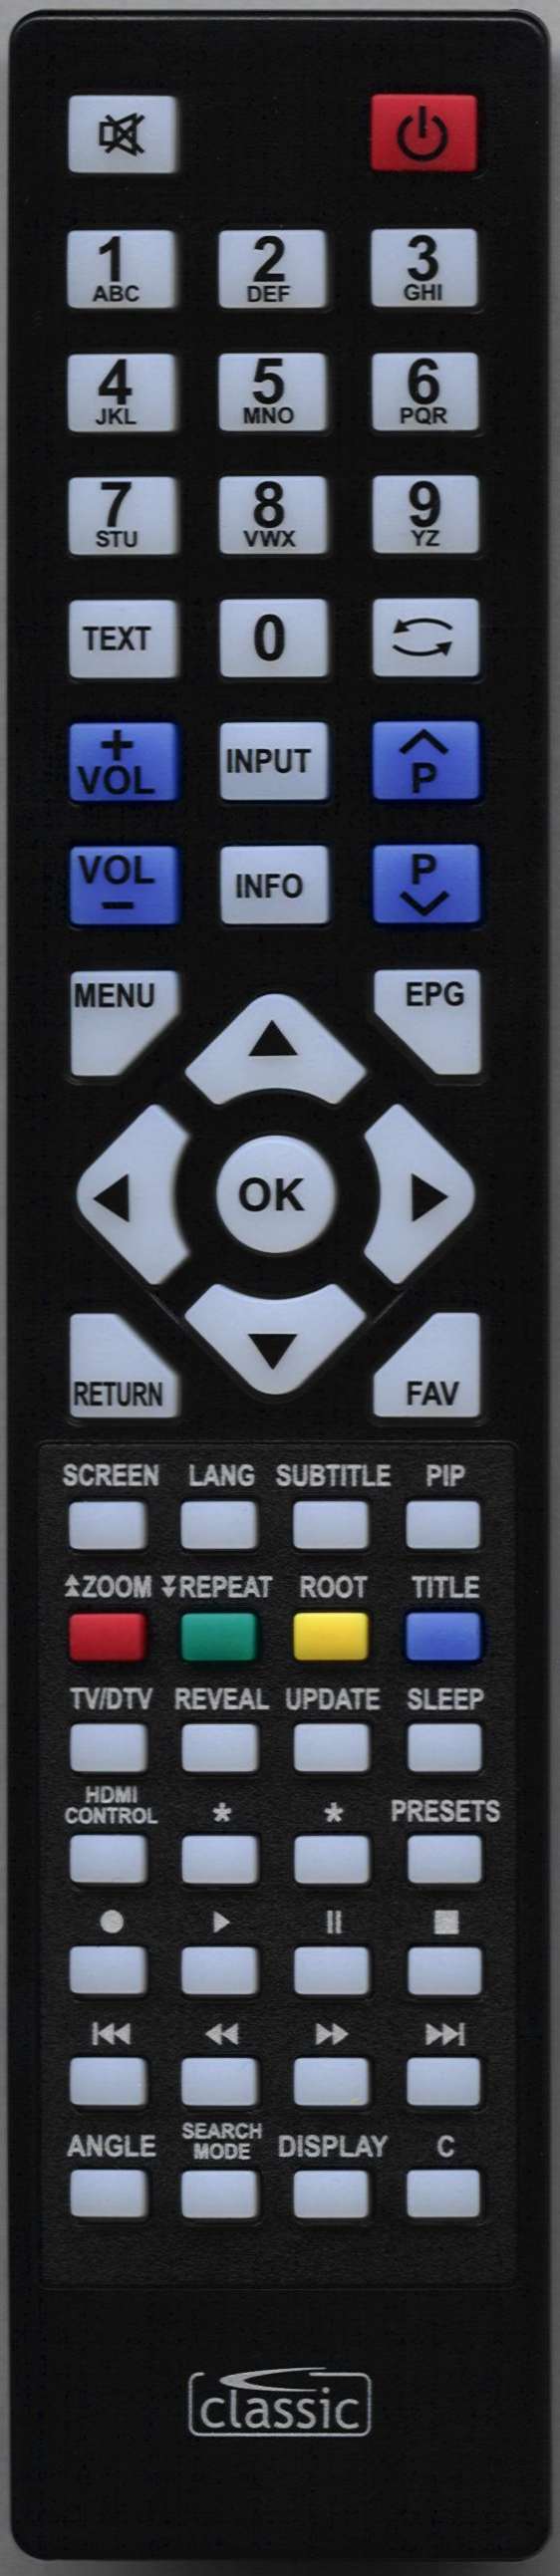 DIGIHOME LCD19913HD Remote Control Alternative